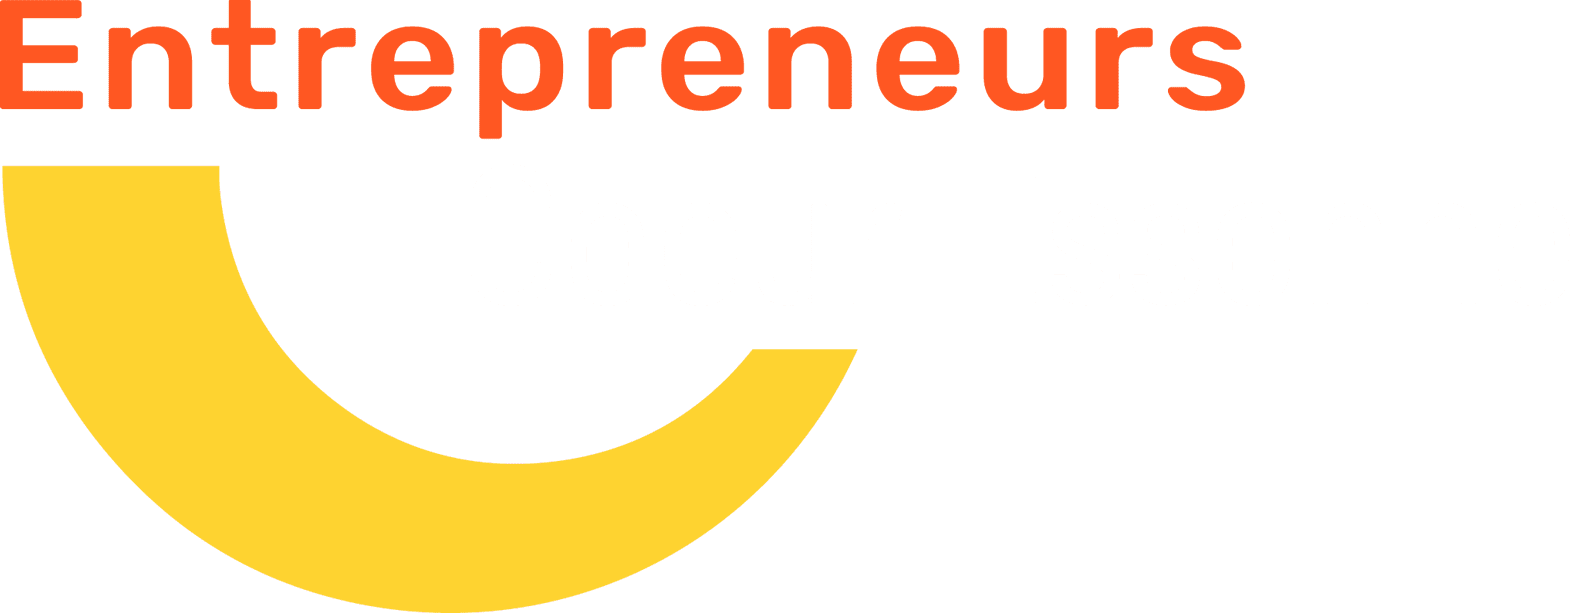 Entrepreneurs Coeur Essonne - Logo Texte blanc